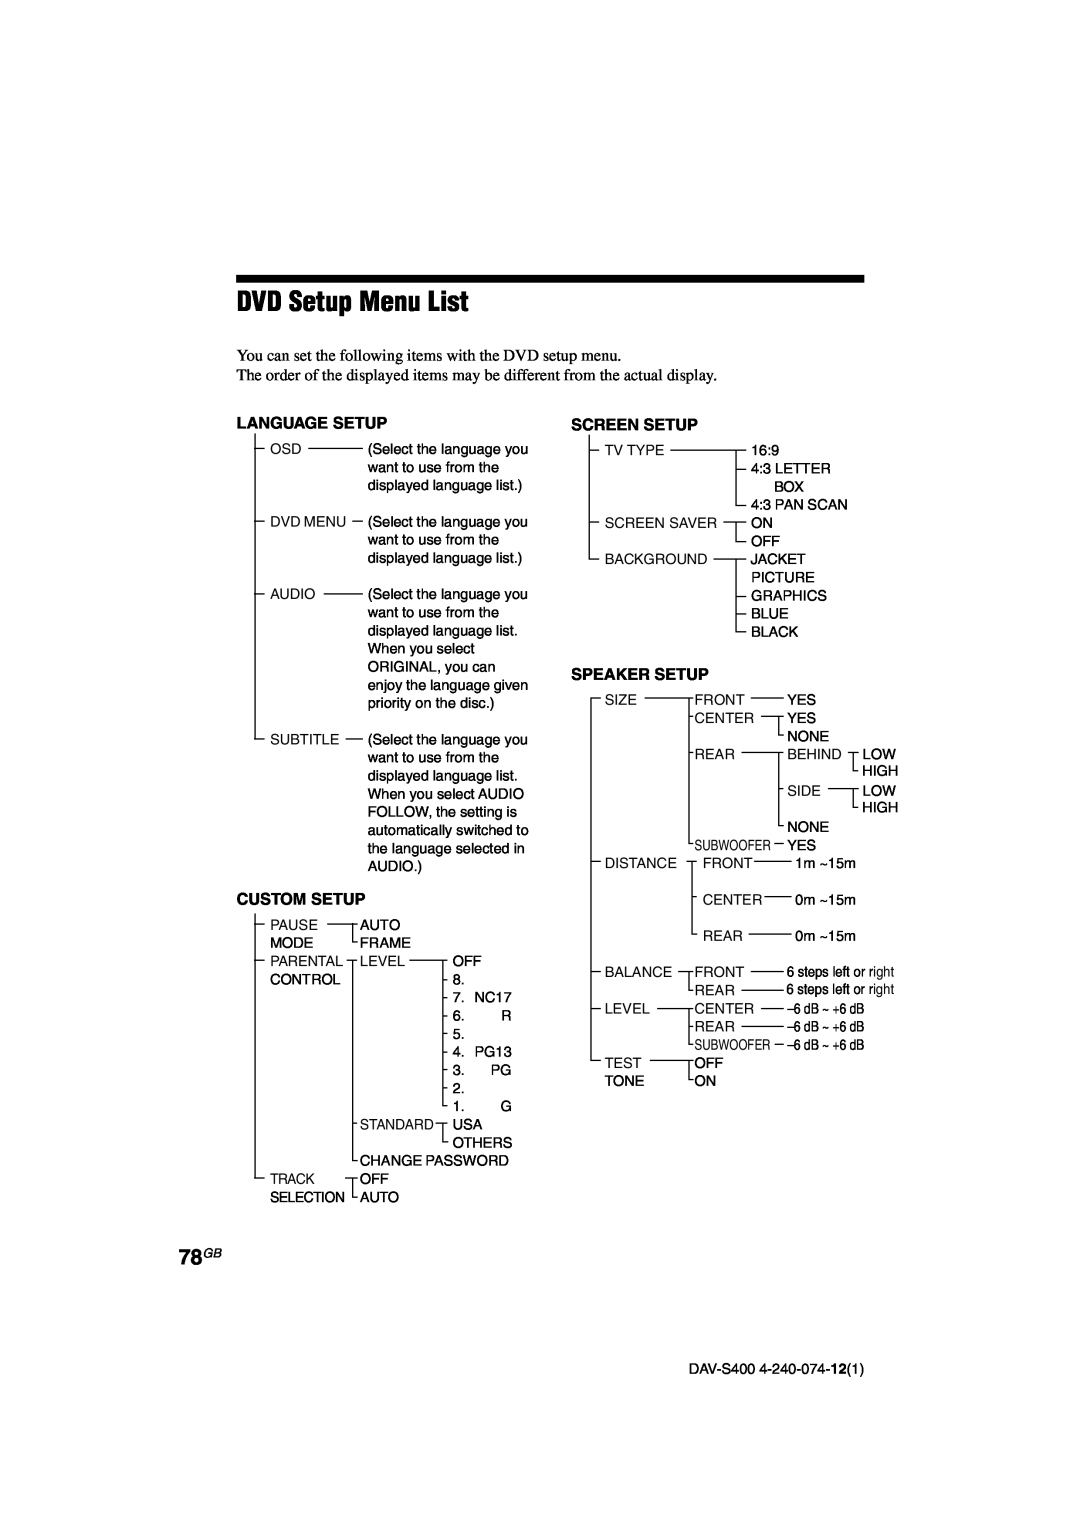 Sony DAV-S400 manual DVD Setup Menu List, 78GB, Language Setup, Custom Setup, Screen Setup, Speaker Setup 